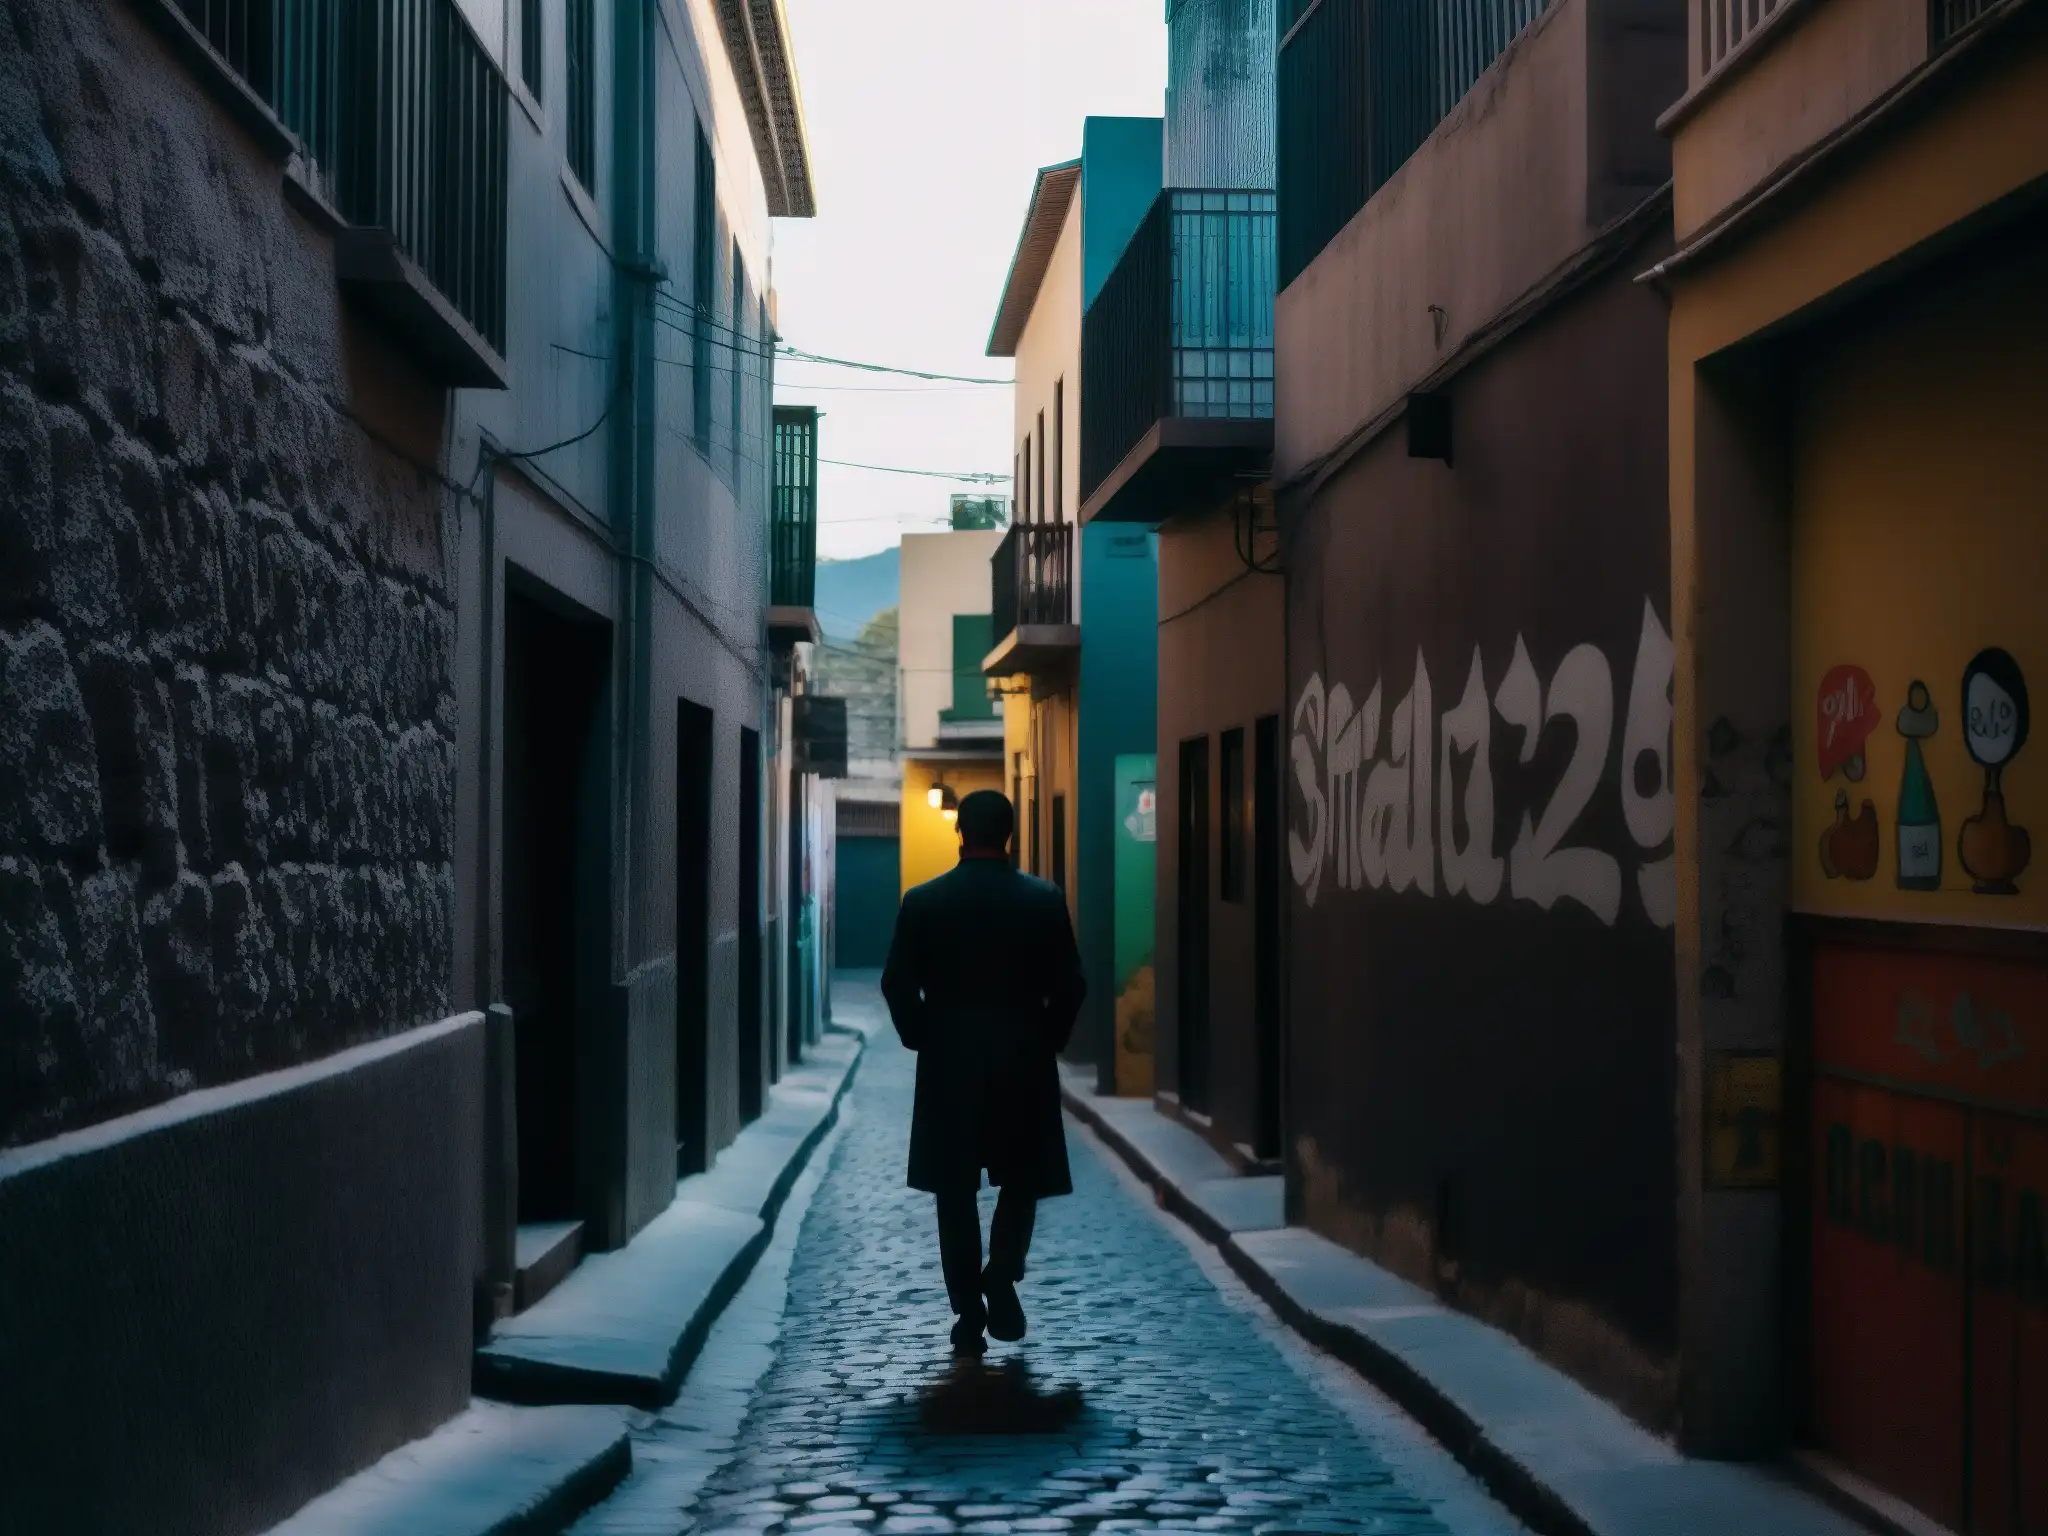 Un callejón misterioso de Monterrey, México, con un solitario caminante en la penumbra